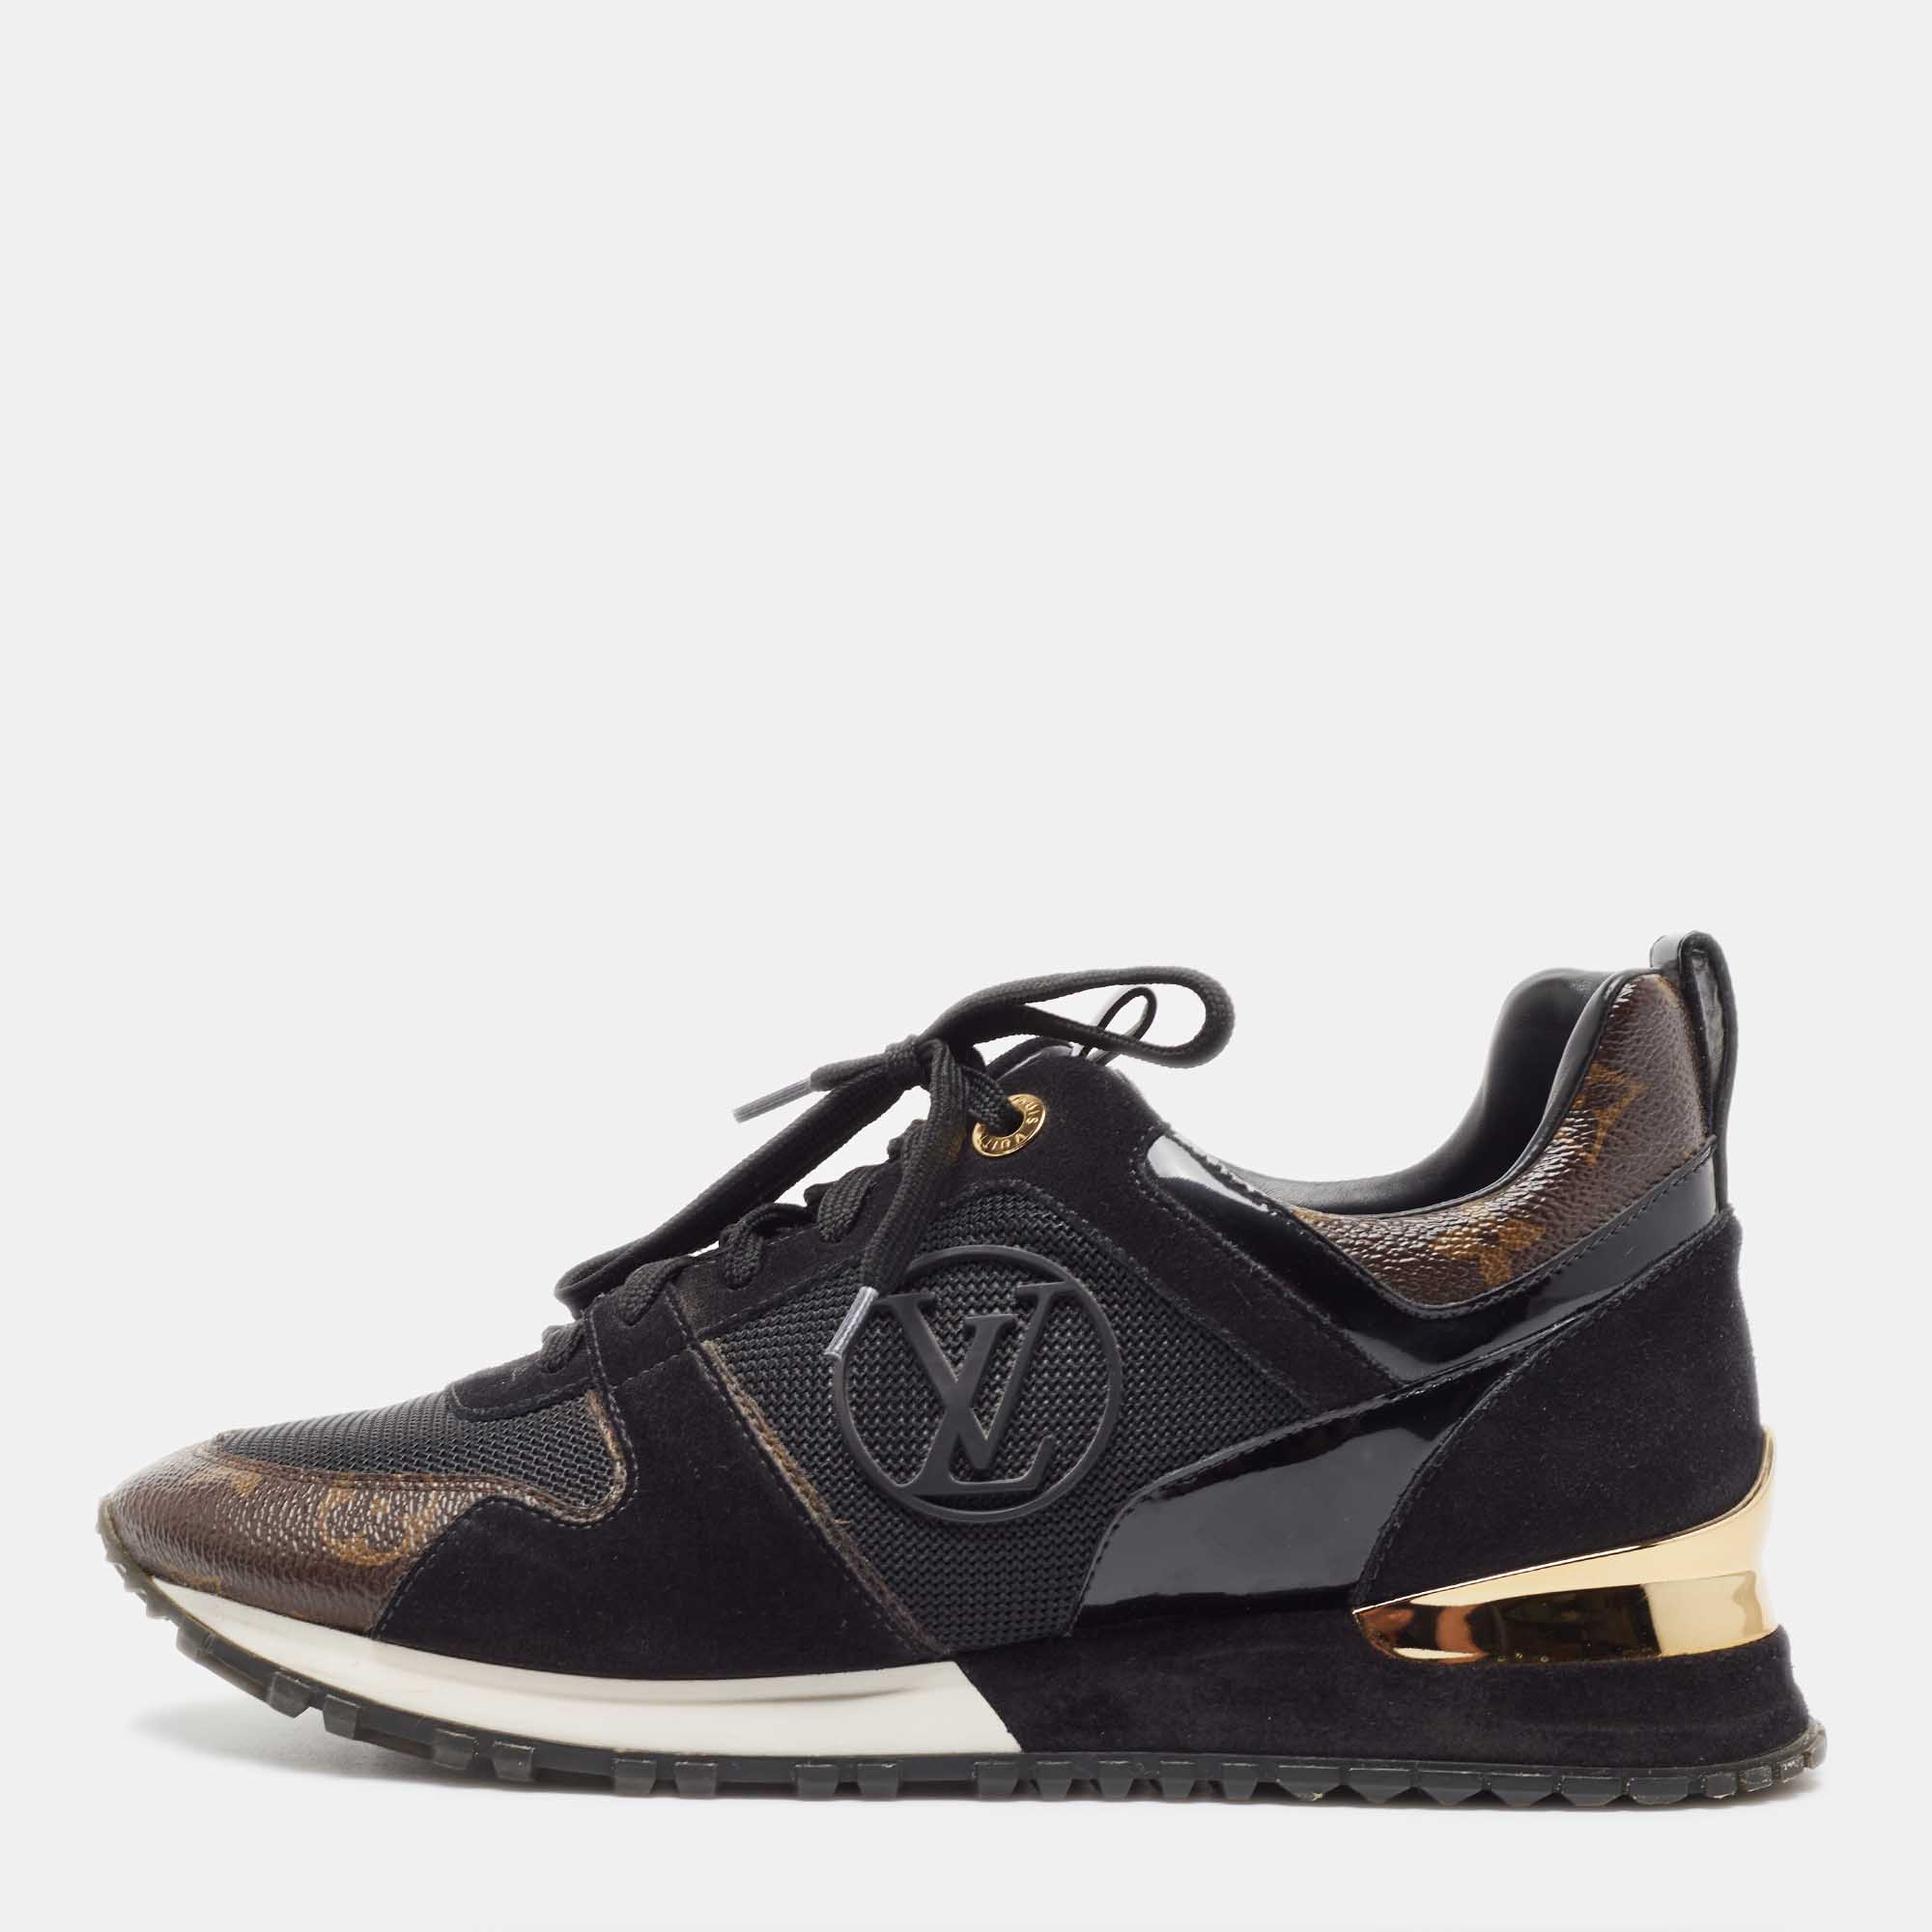 Louis Vuitton Black Nylon, Leather Archlight  Sneakers Size 38